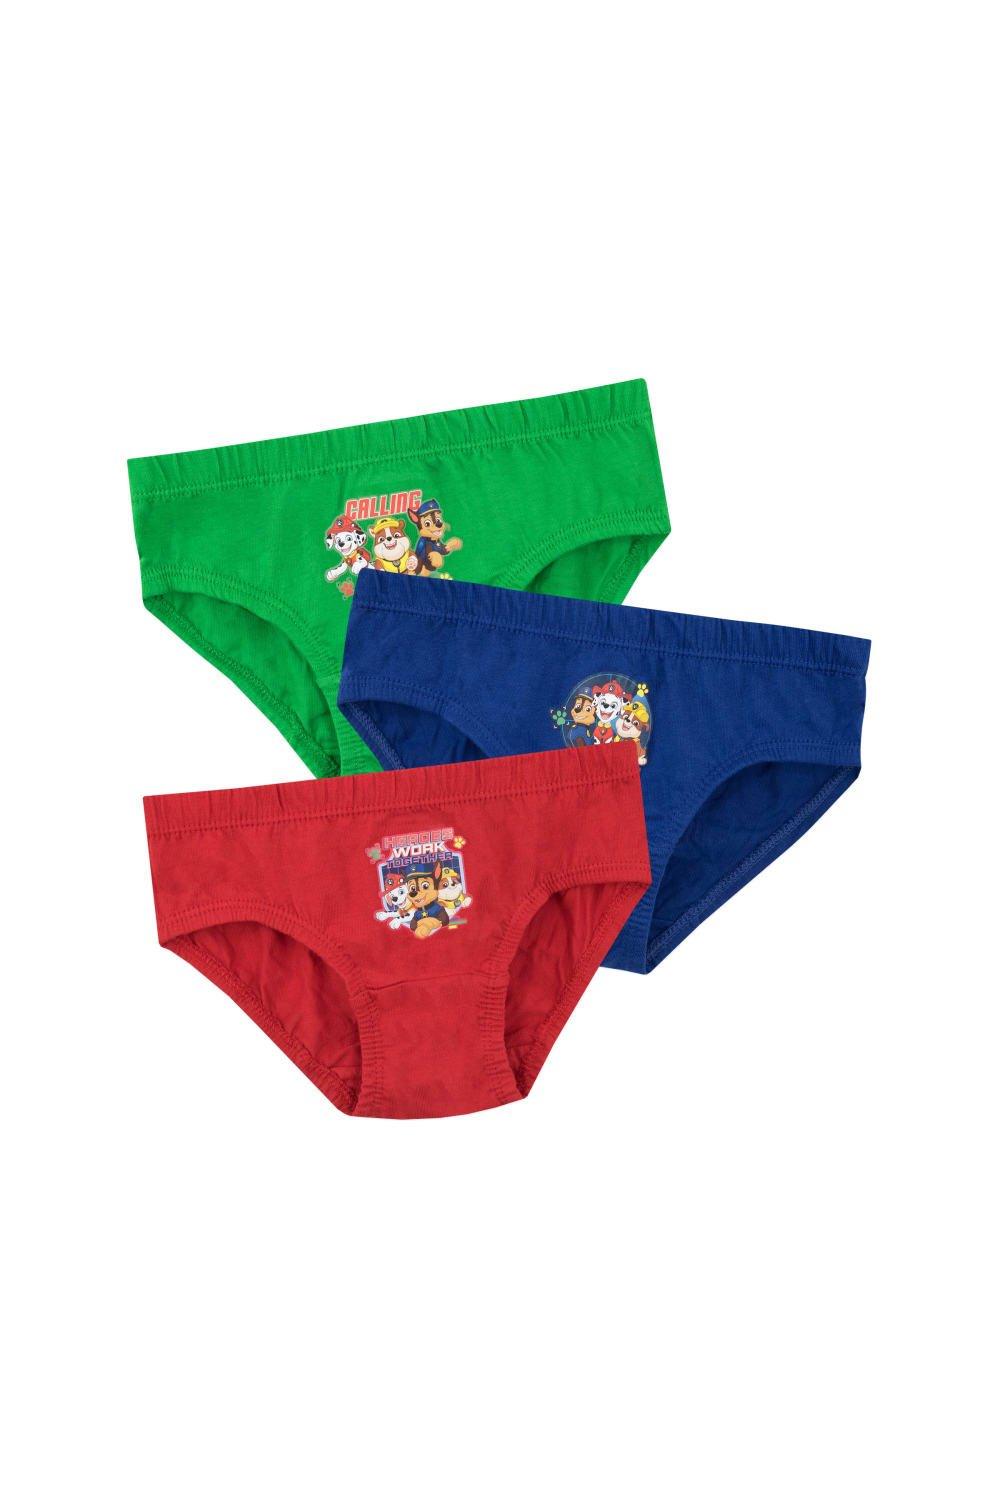 Paw Patrol Underwear 3 Pack